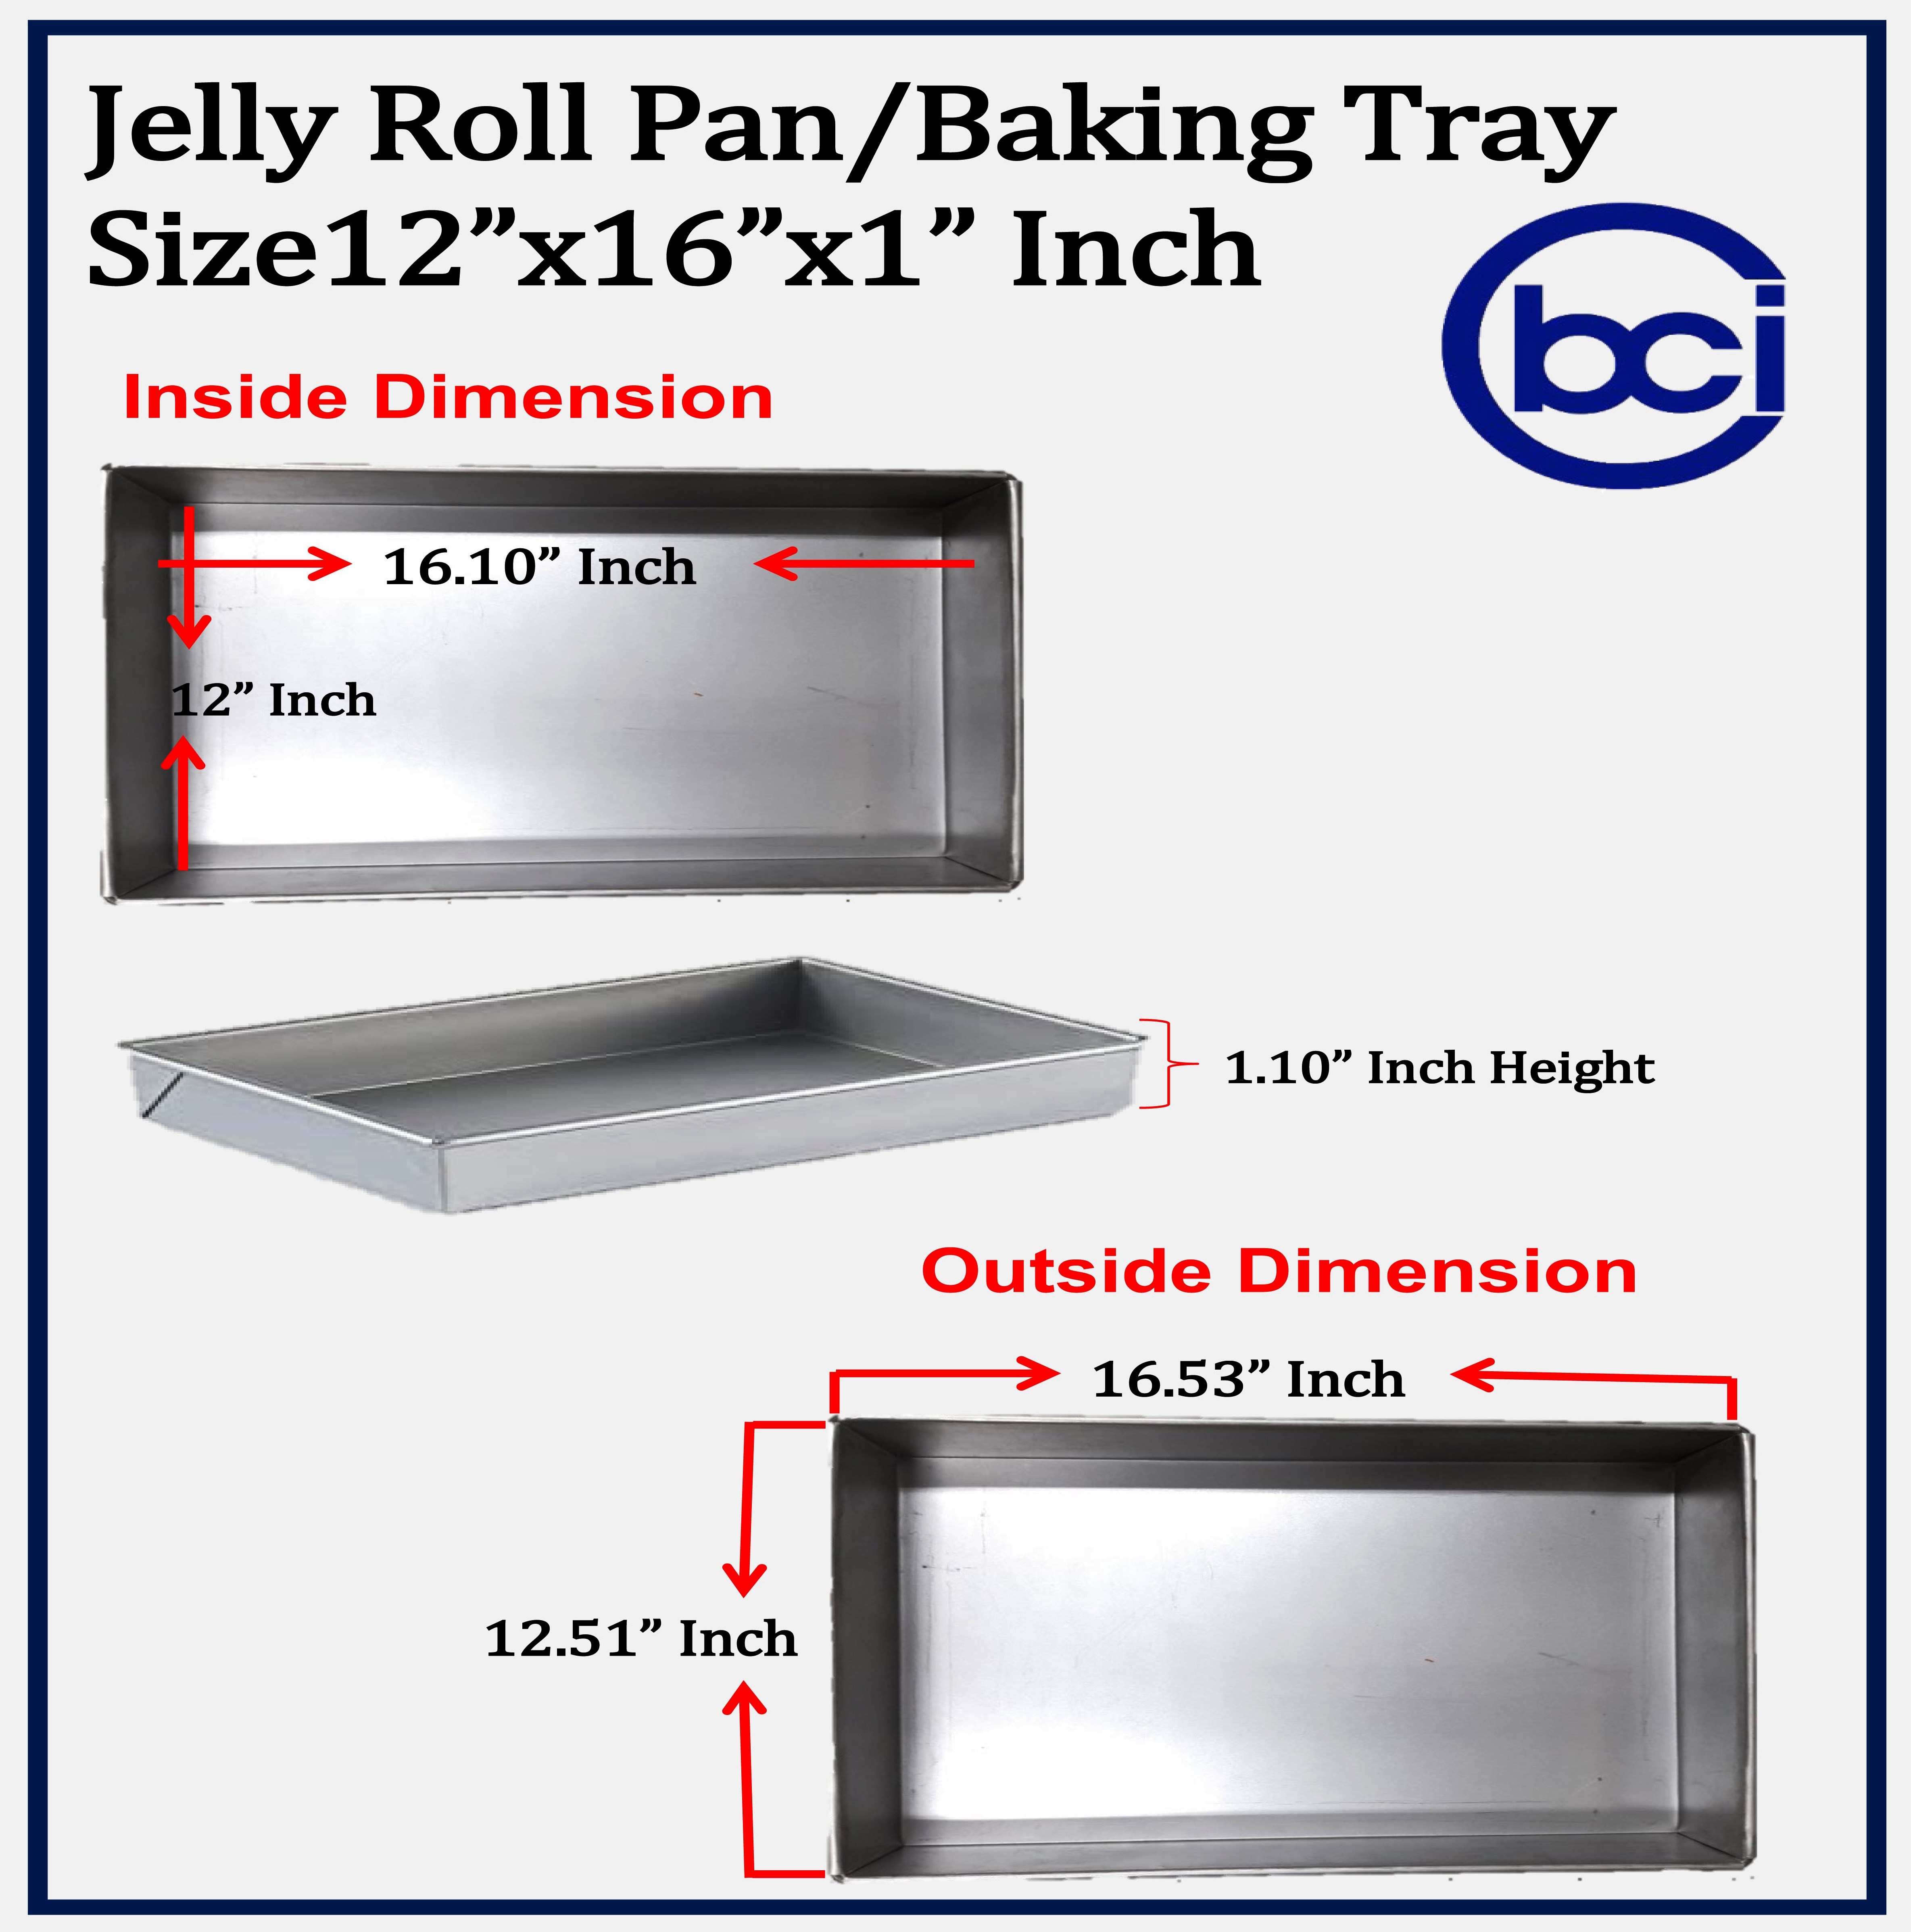 Jelly Roll Pan - 11 x 16 x 1